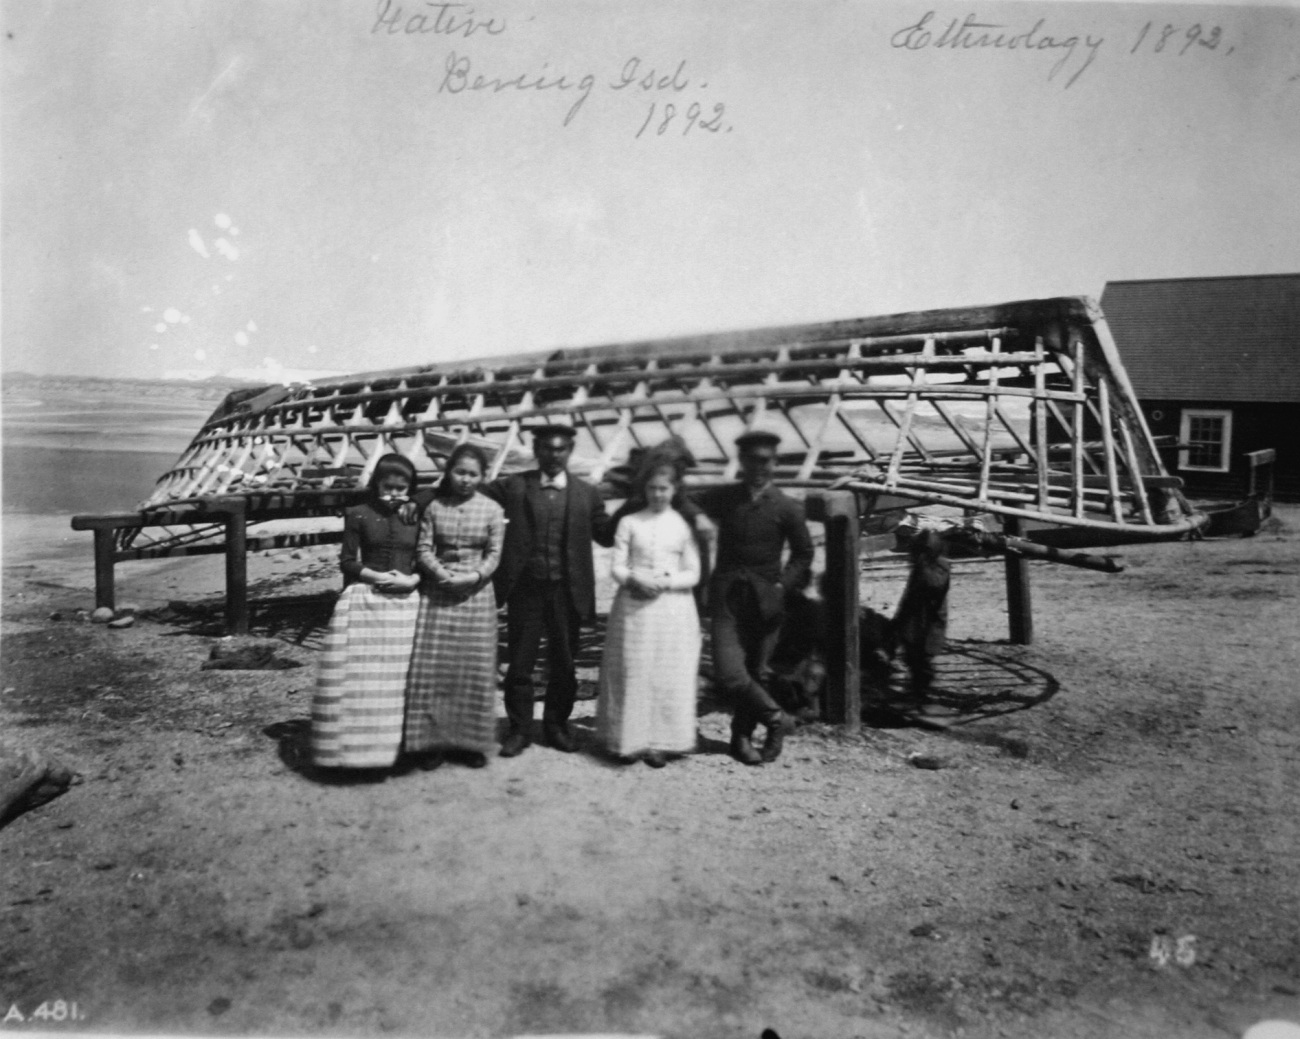 Natives, Bering Island, 1892